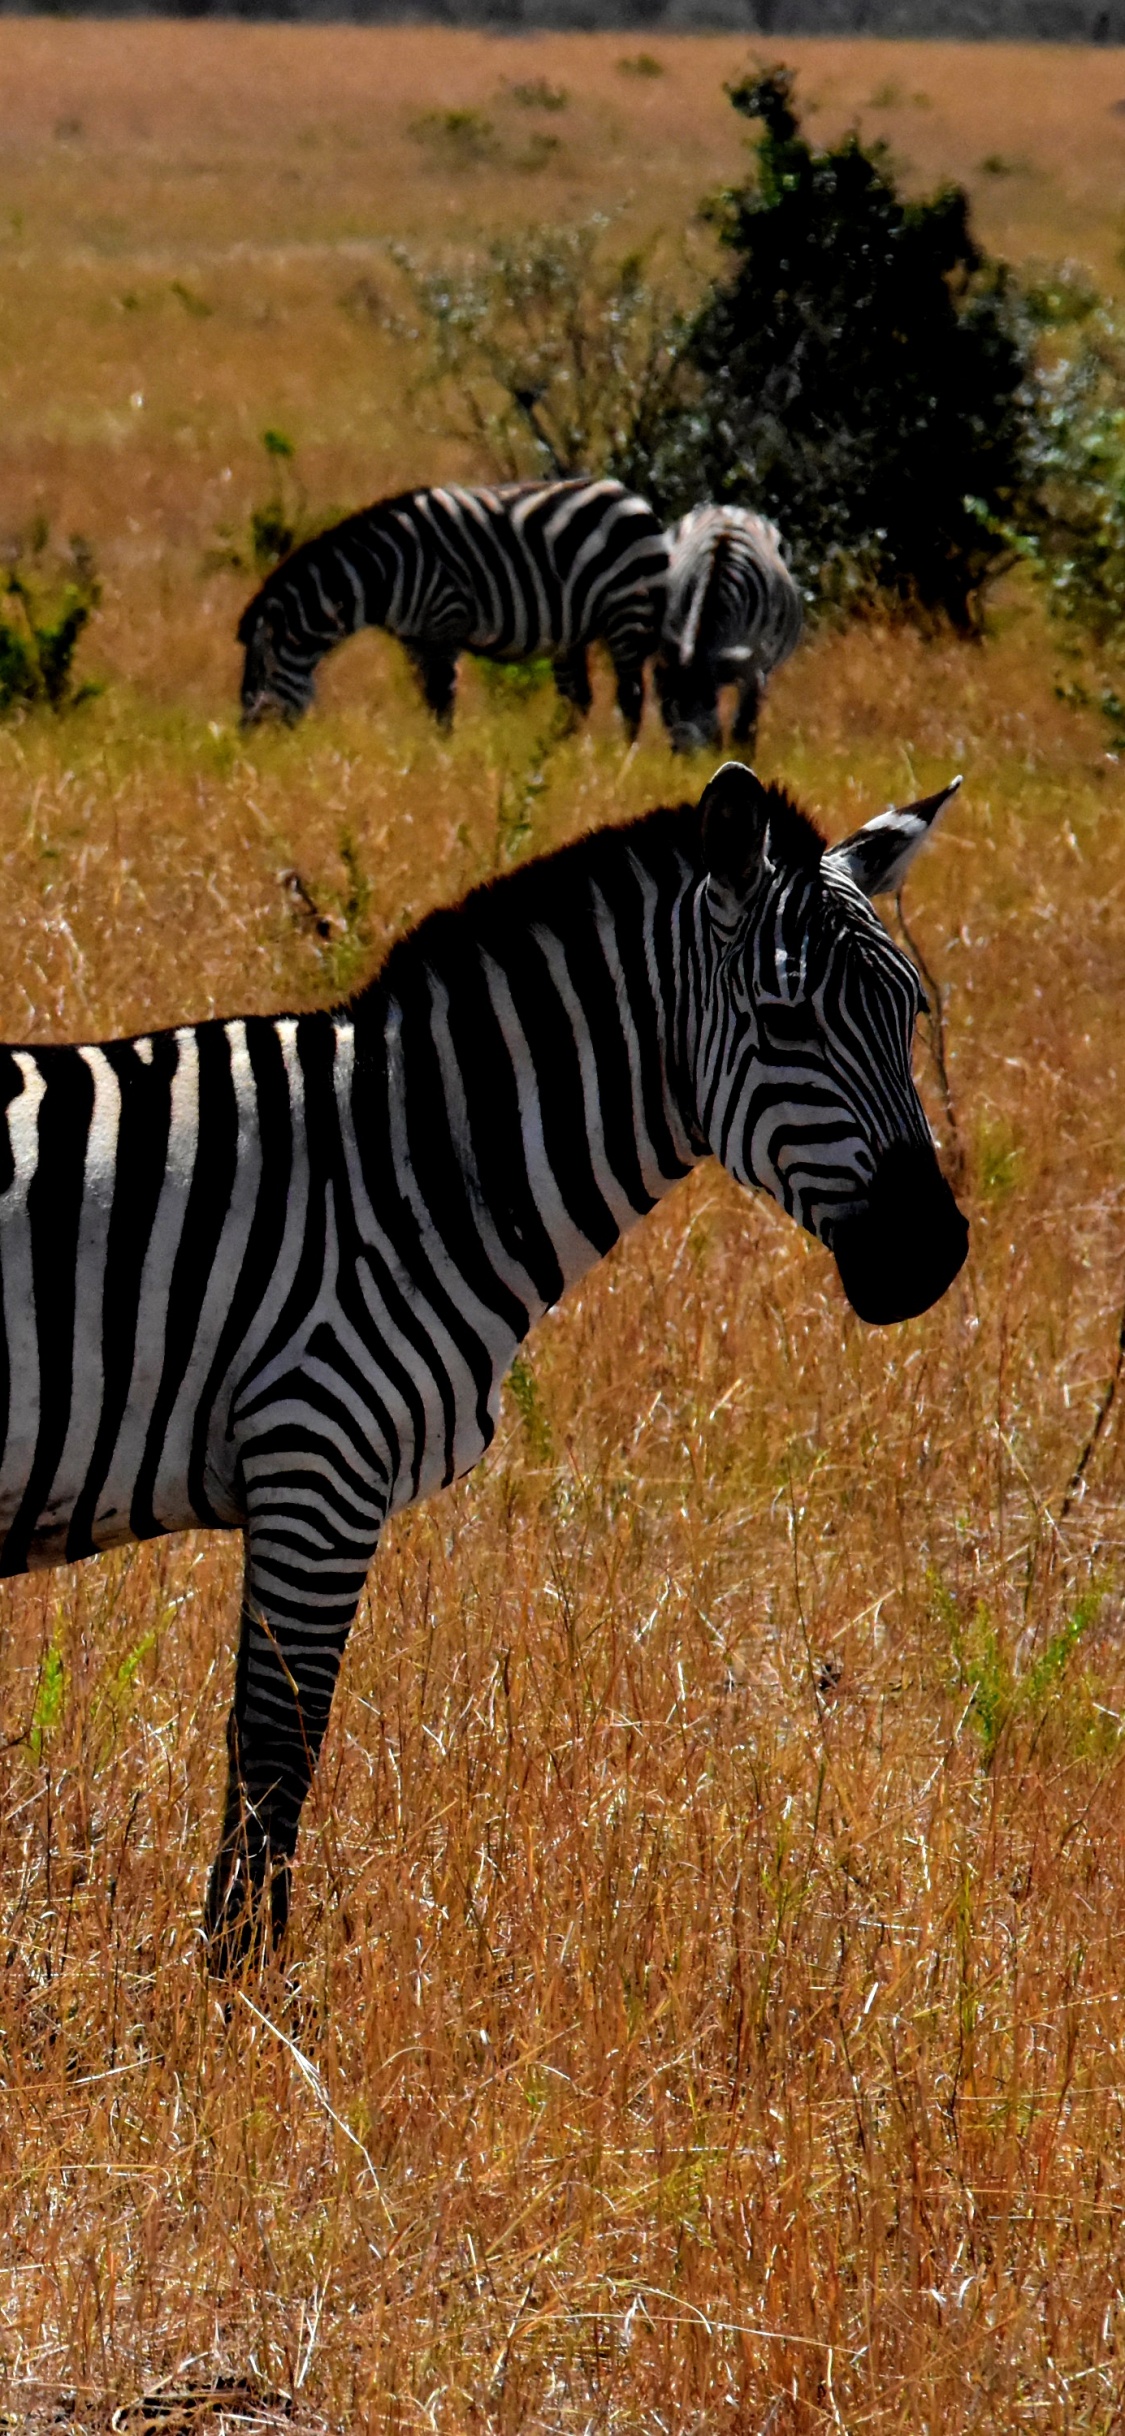 Zebra on Brown Grass Field During Daytime. Wallpaper in 1125x2436 Resolution